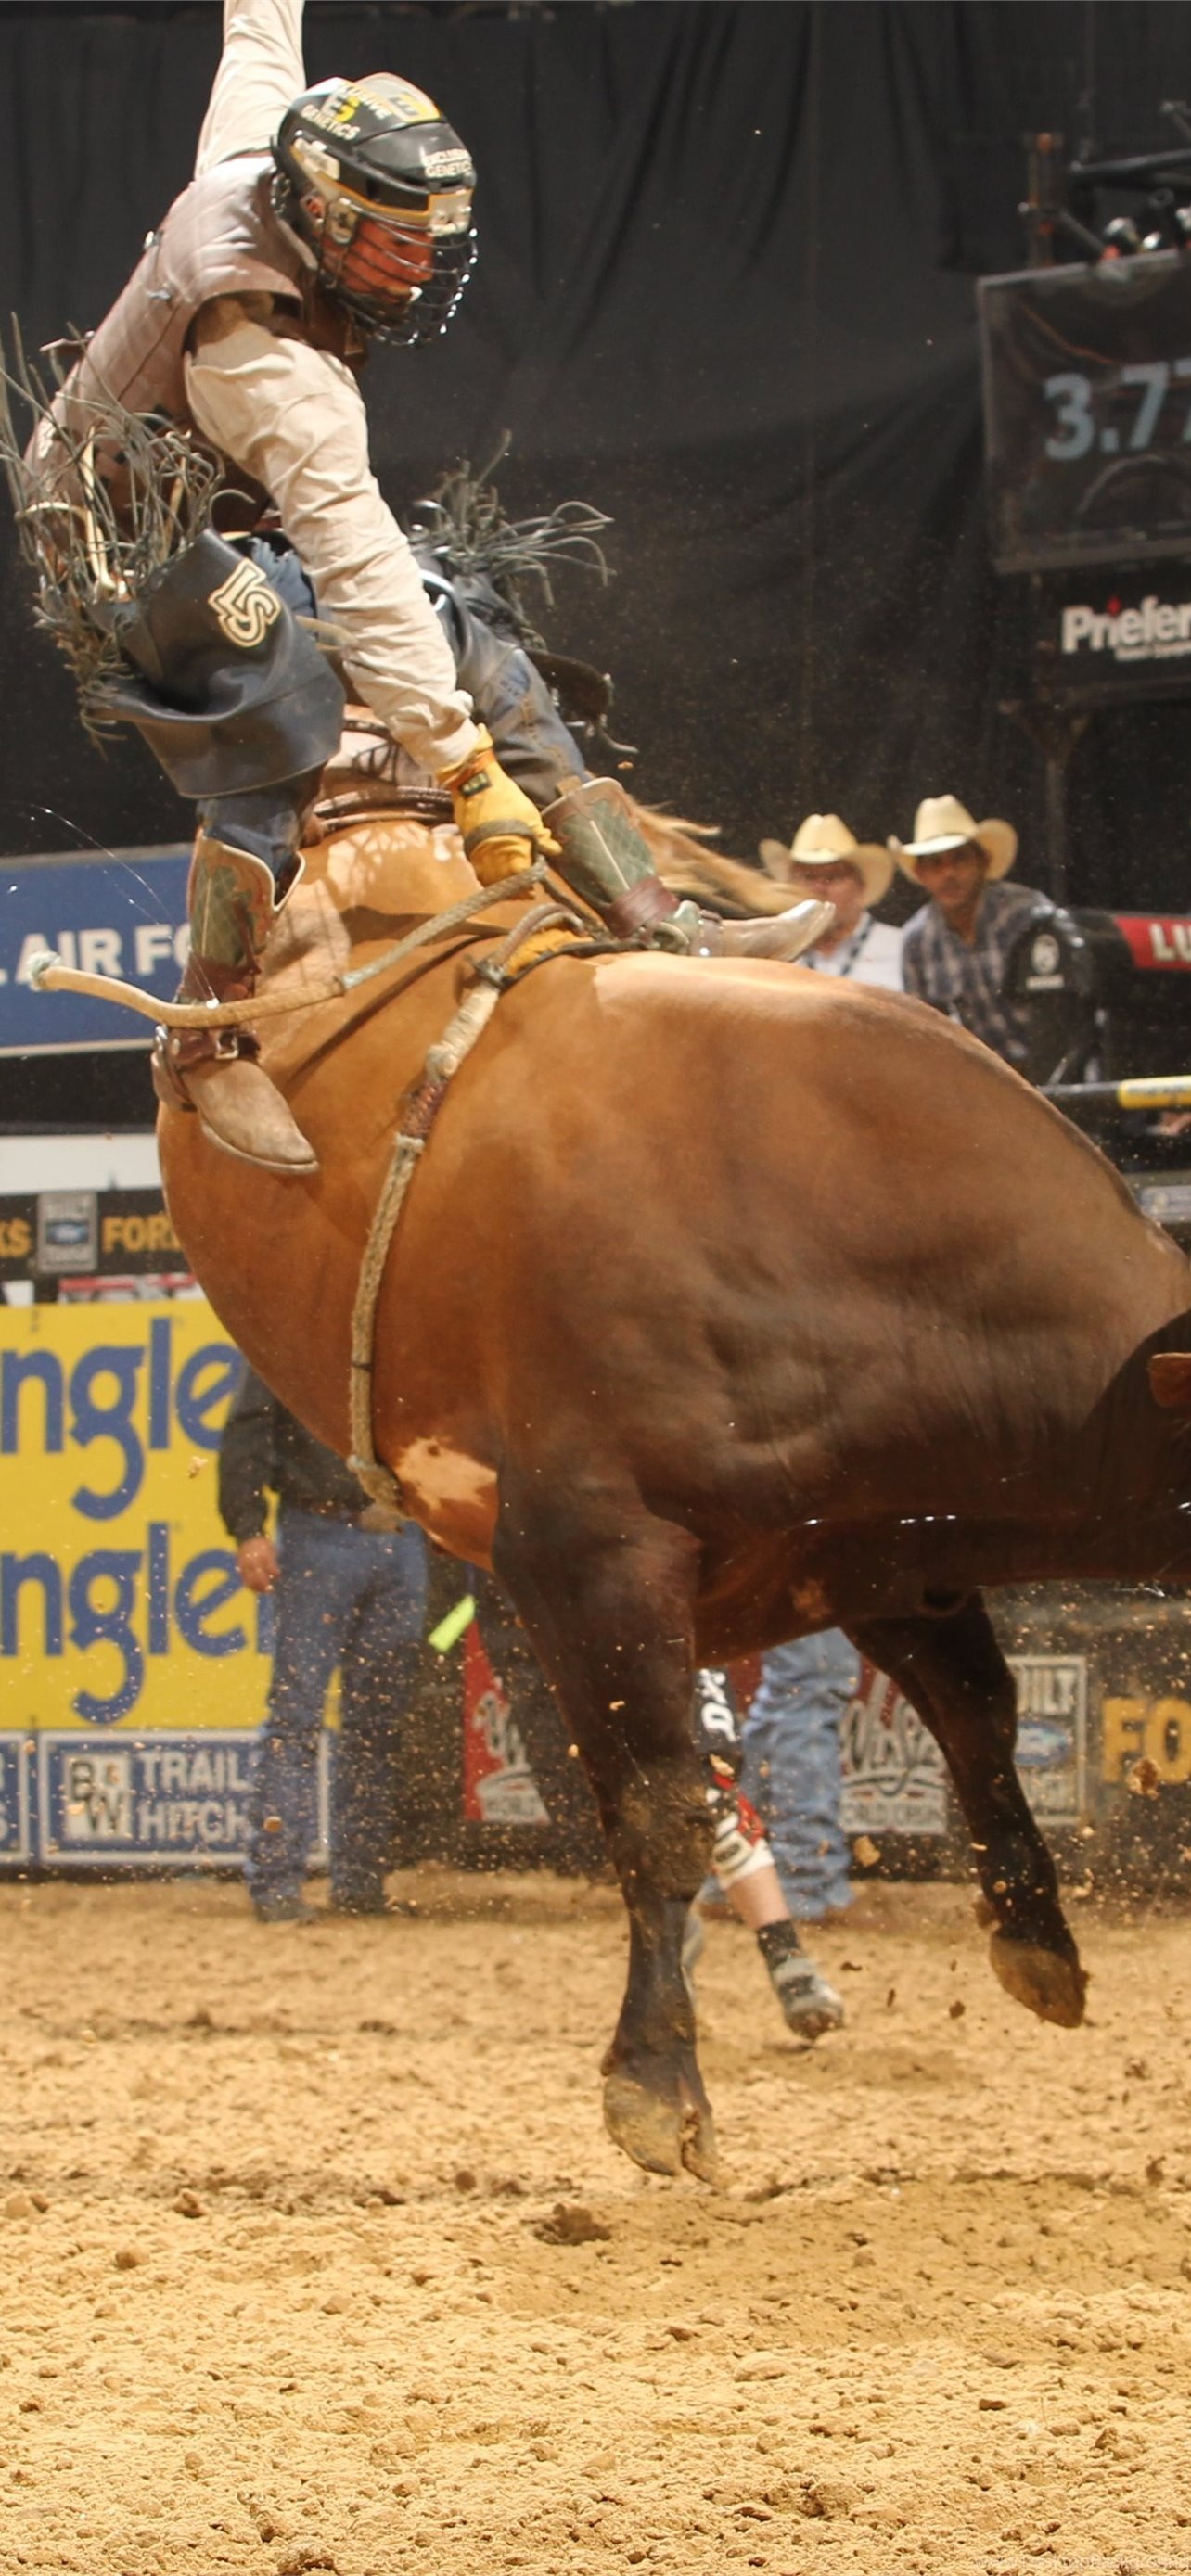 Bullriding: Freestyle American Bullfighting, Raging bull, A rodeo sport, Bullriding tournament. 1290x2780 HD Wallpaper.